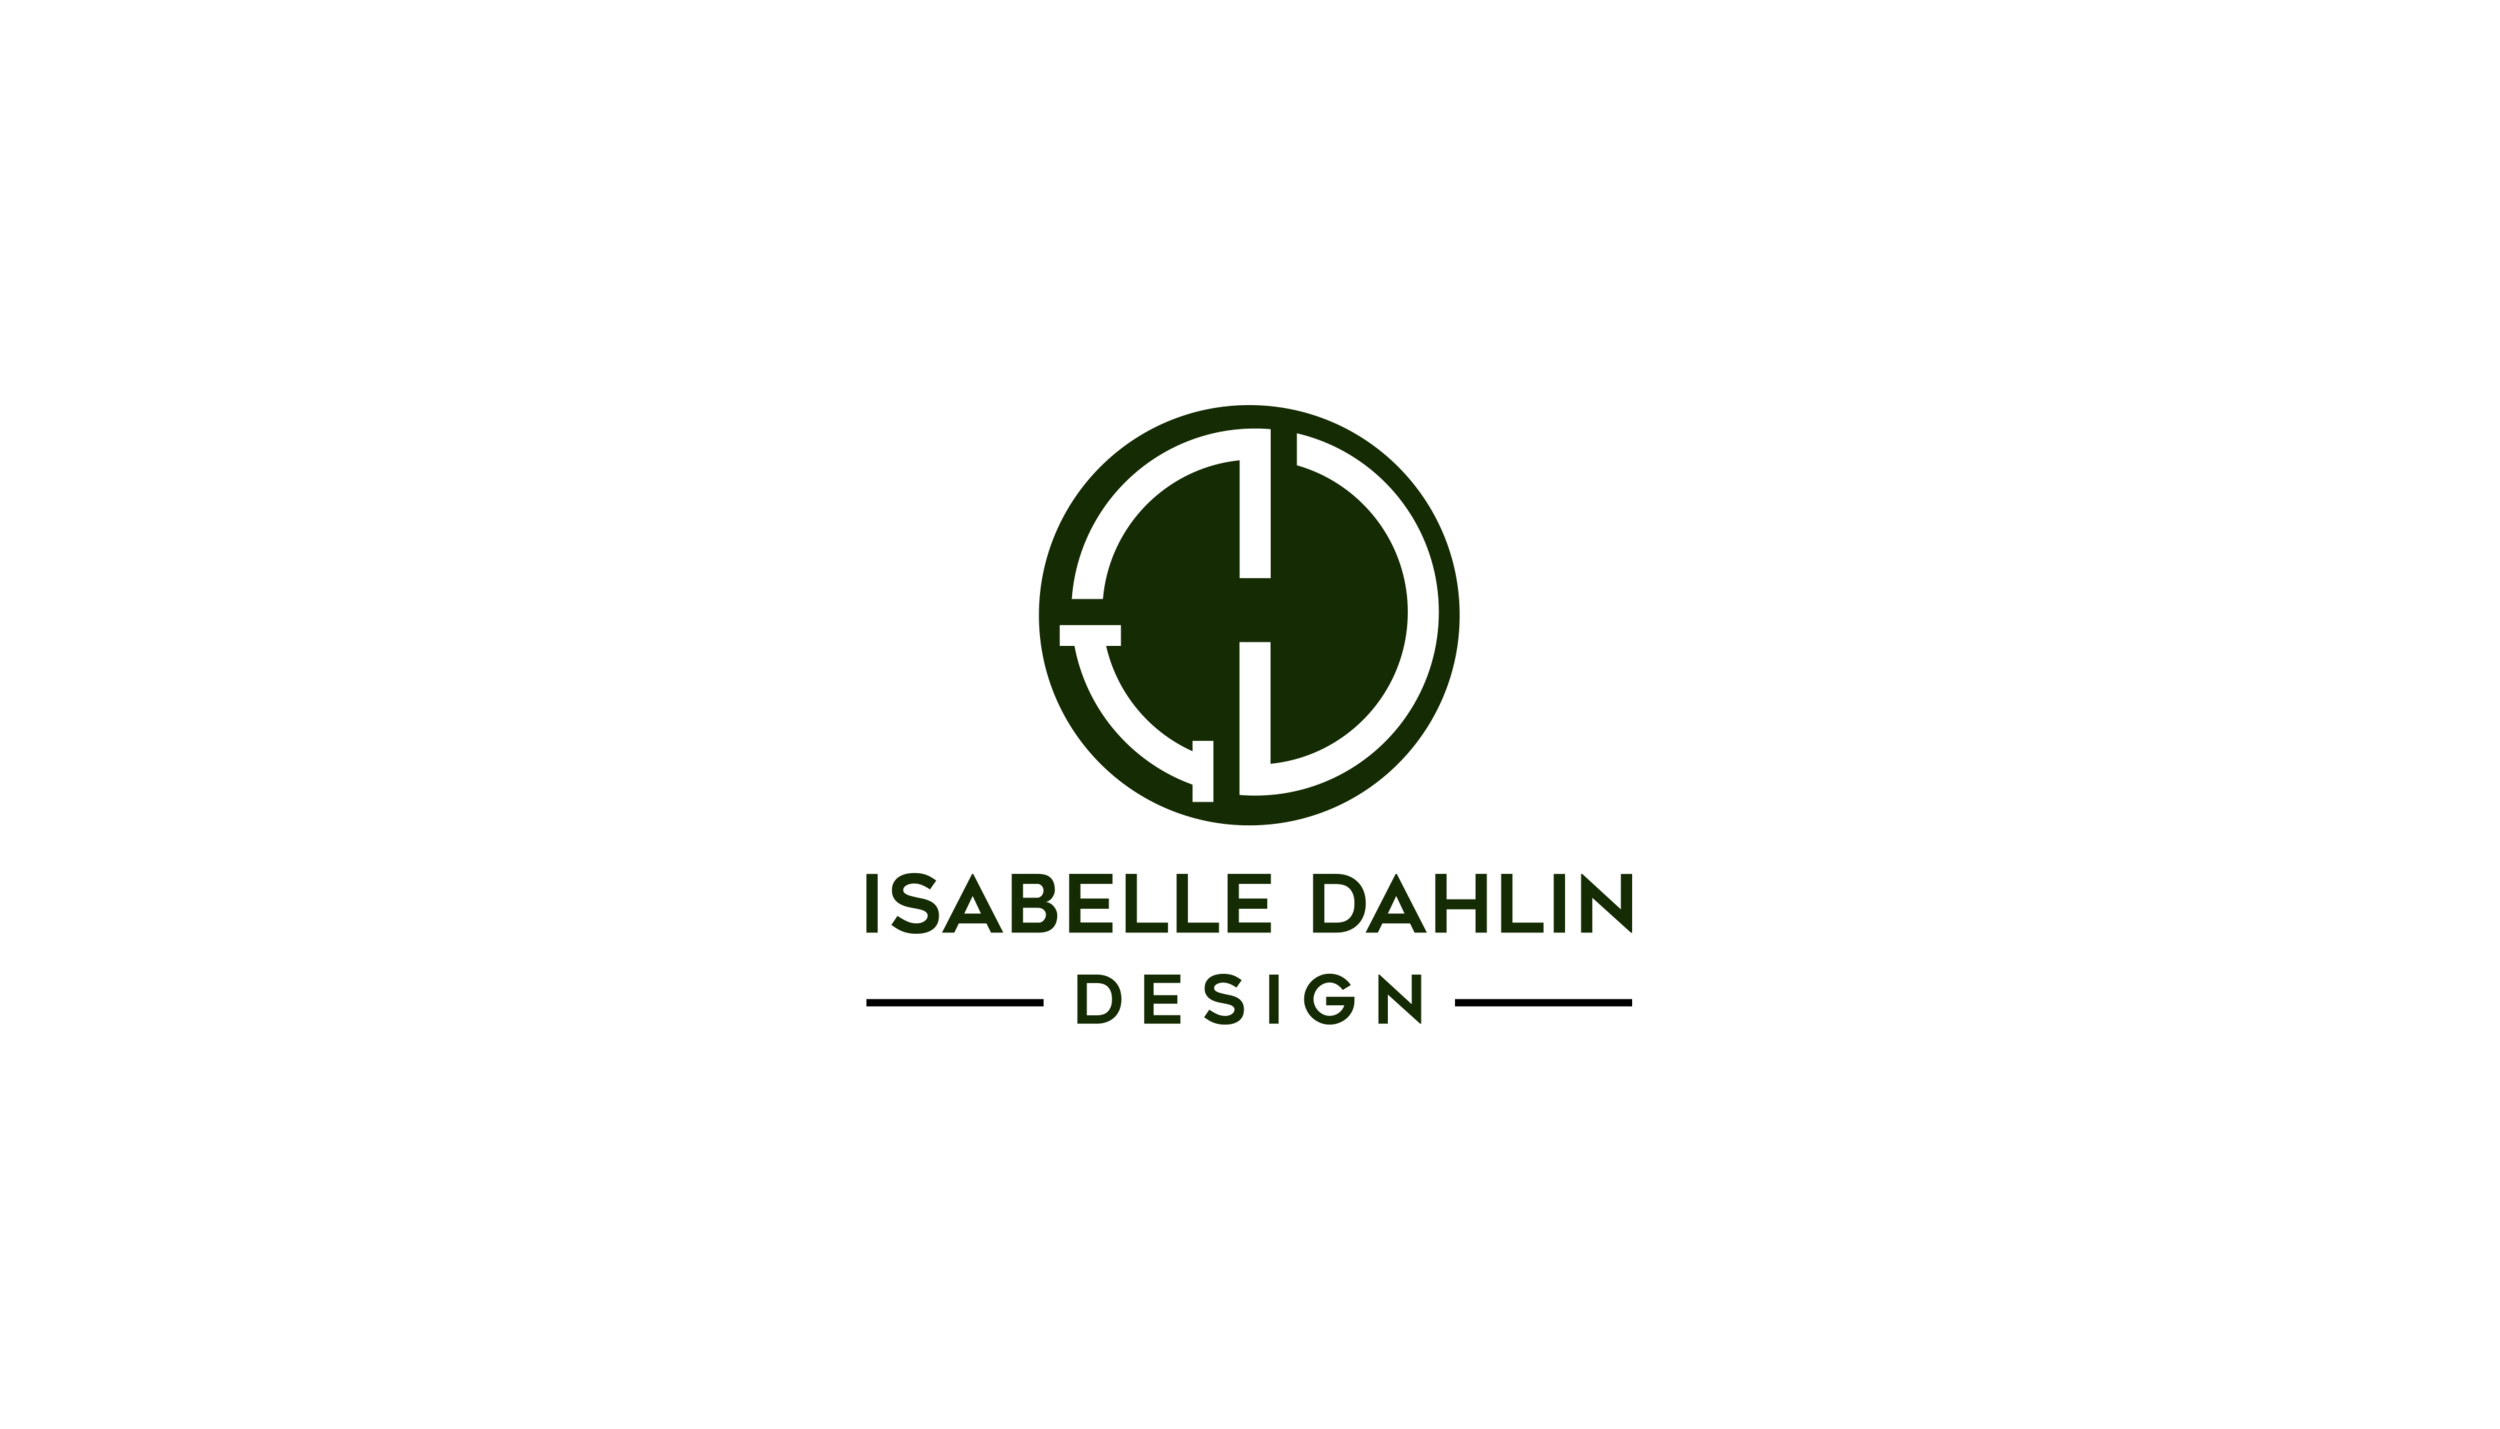 Isabelle Dahlin Design